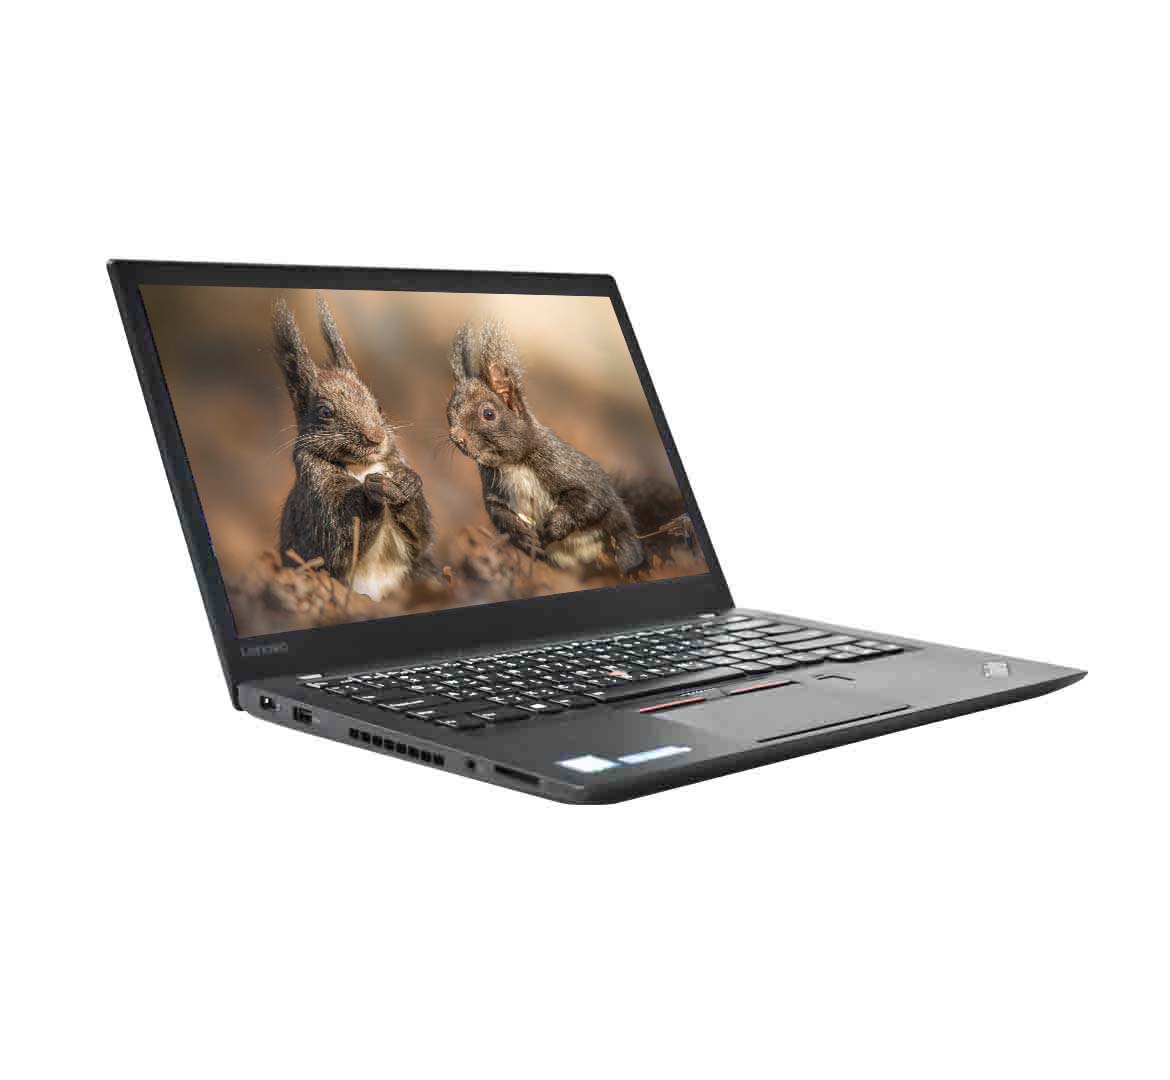 Lenovo ThinkPad T460s Ultrabook Laptop, Intel Core i5-6th Gen CPU, 8GB RAM, 256GB SSD, 14.1 inch Touchscreen, Win 10 Pro